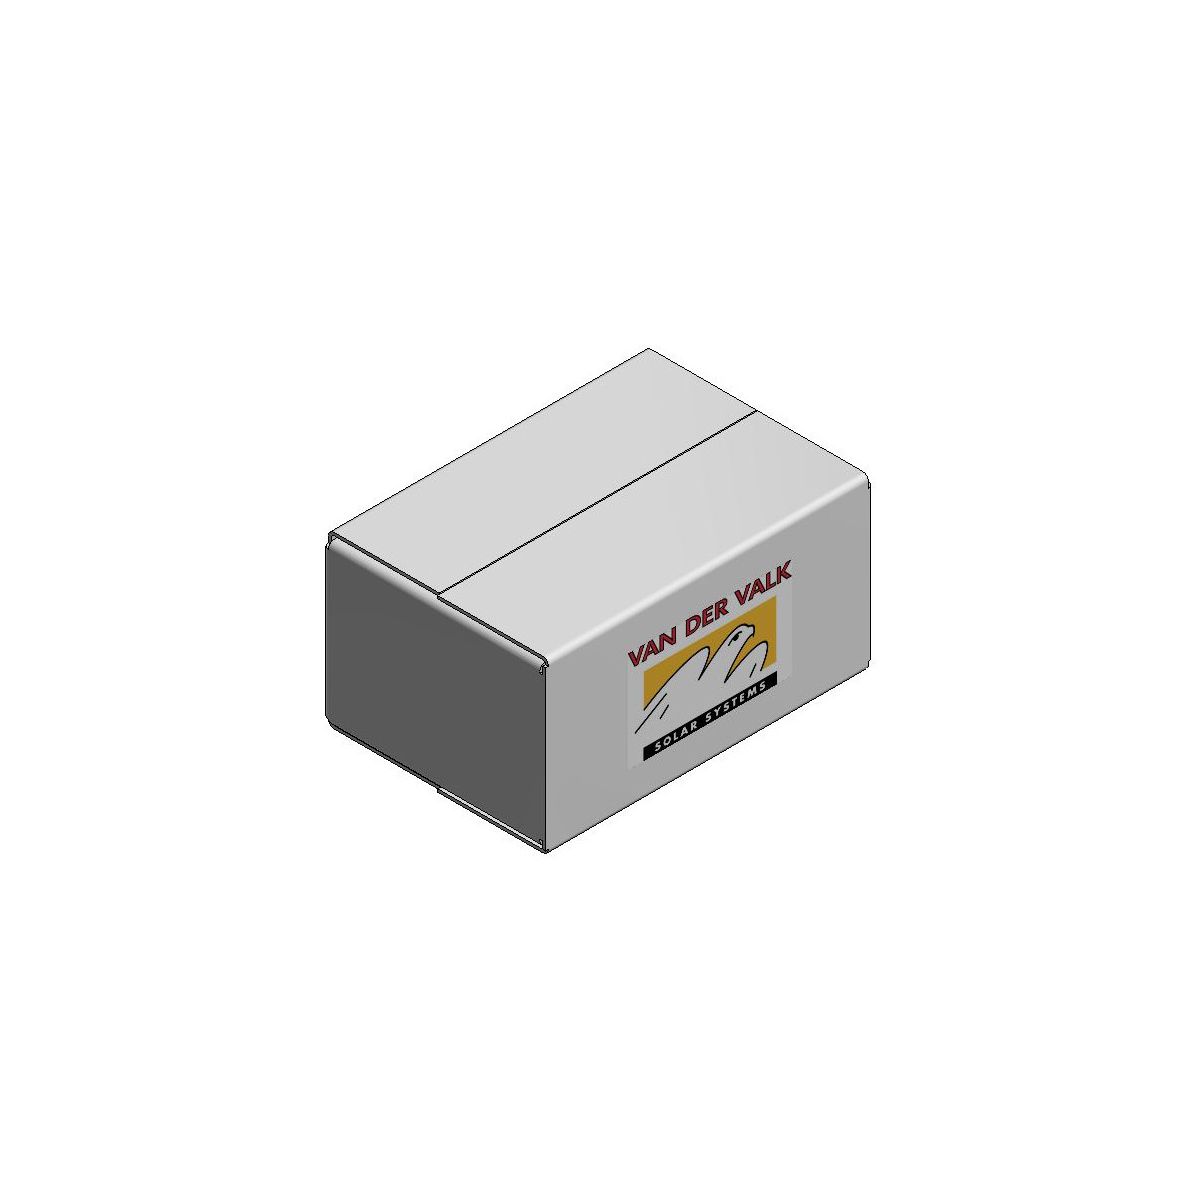 Valkbox Strongline 7 -box small material 759047-01 - 1